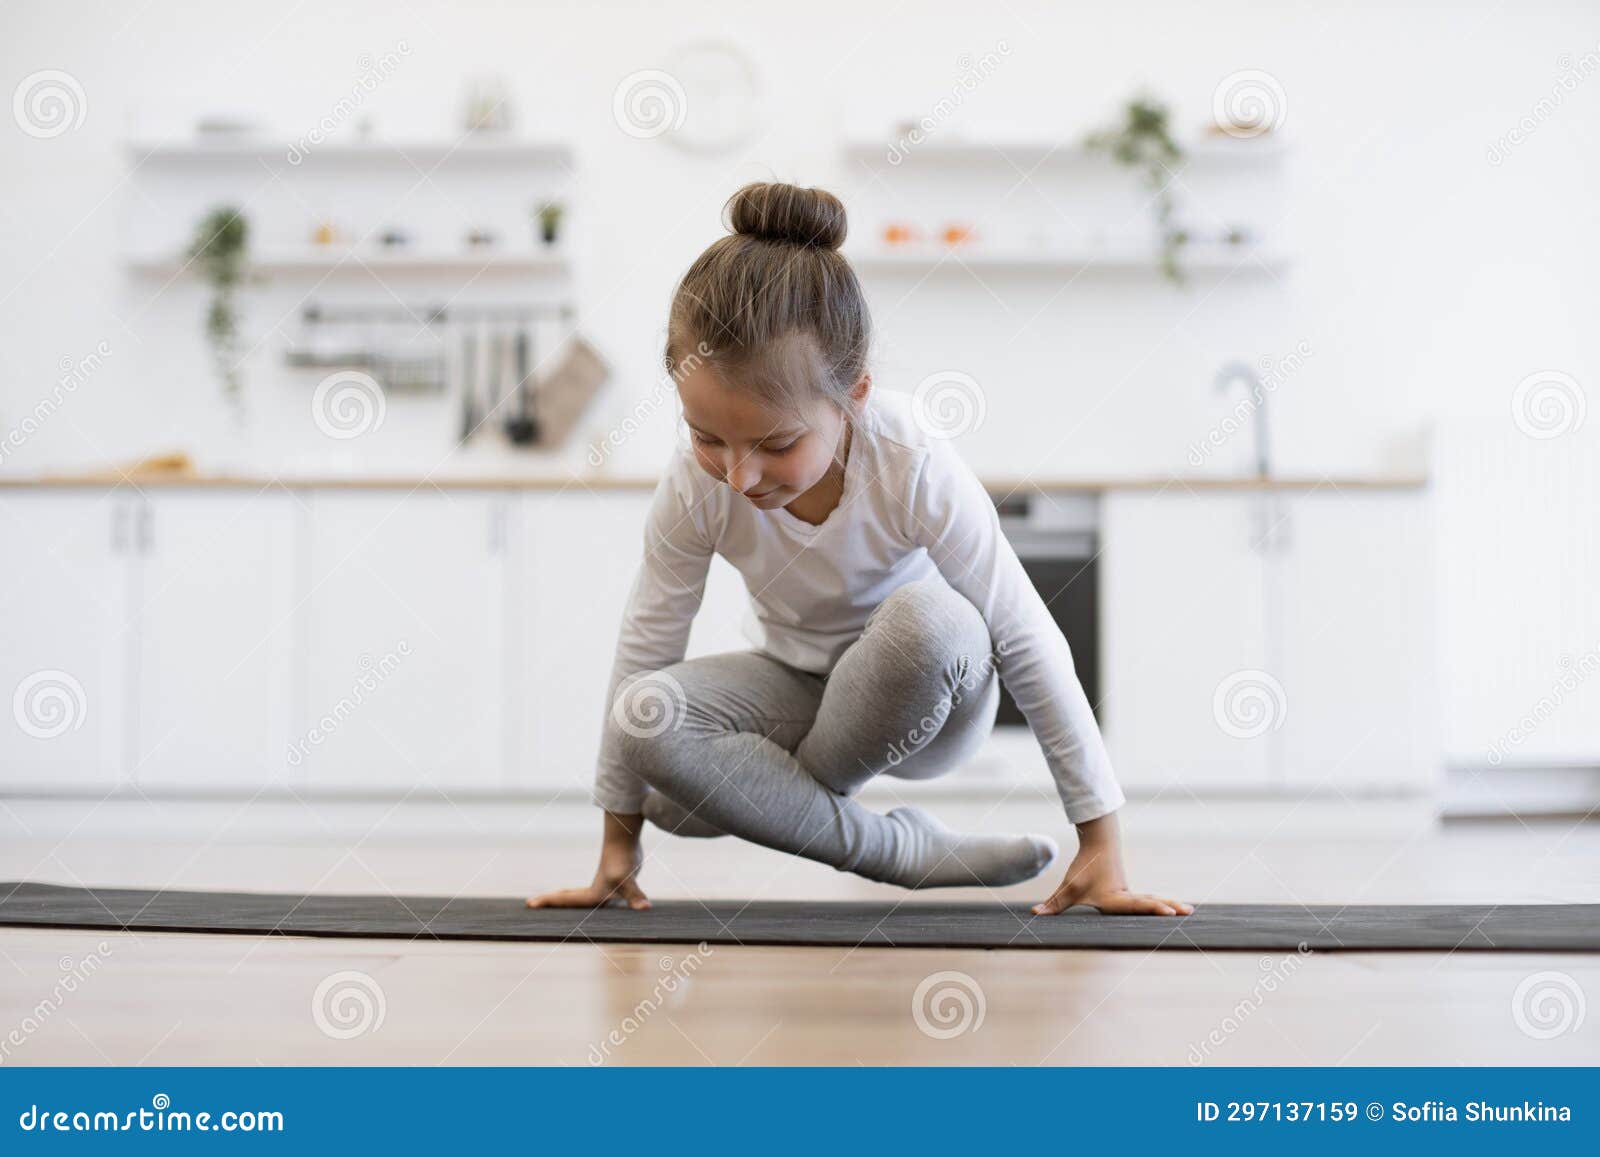 Bakasana- Crane posture | Prana Yoga